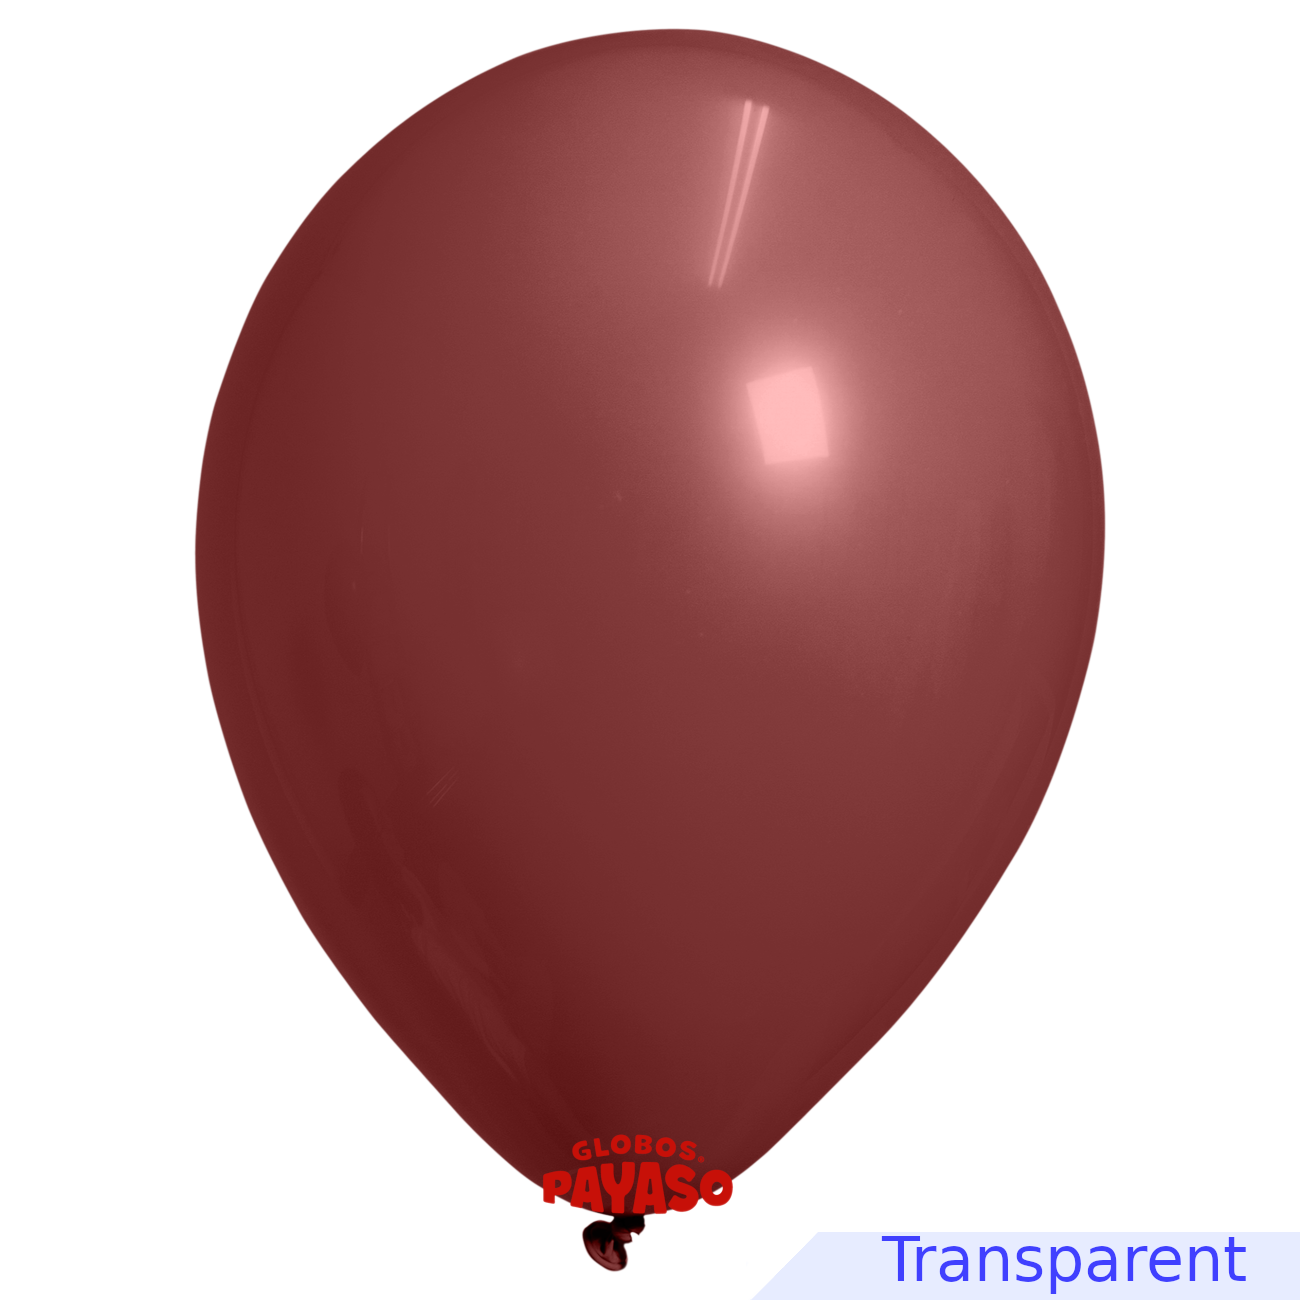 Globos Payaso / Unique 5" Burgundy Translucid Decorator Balloon